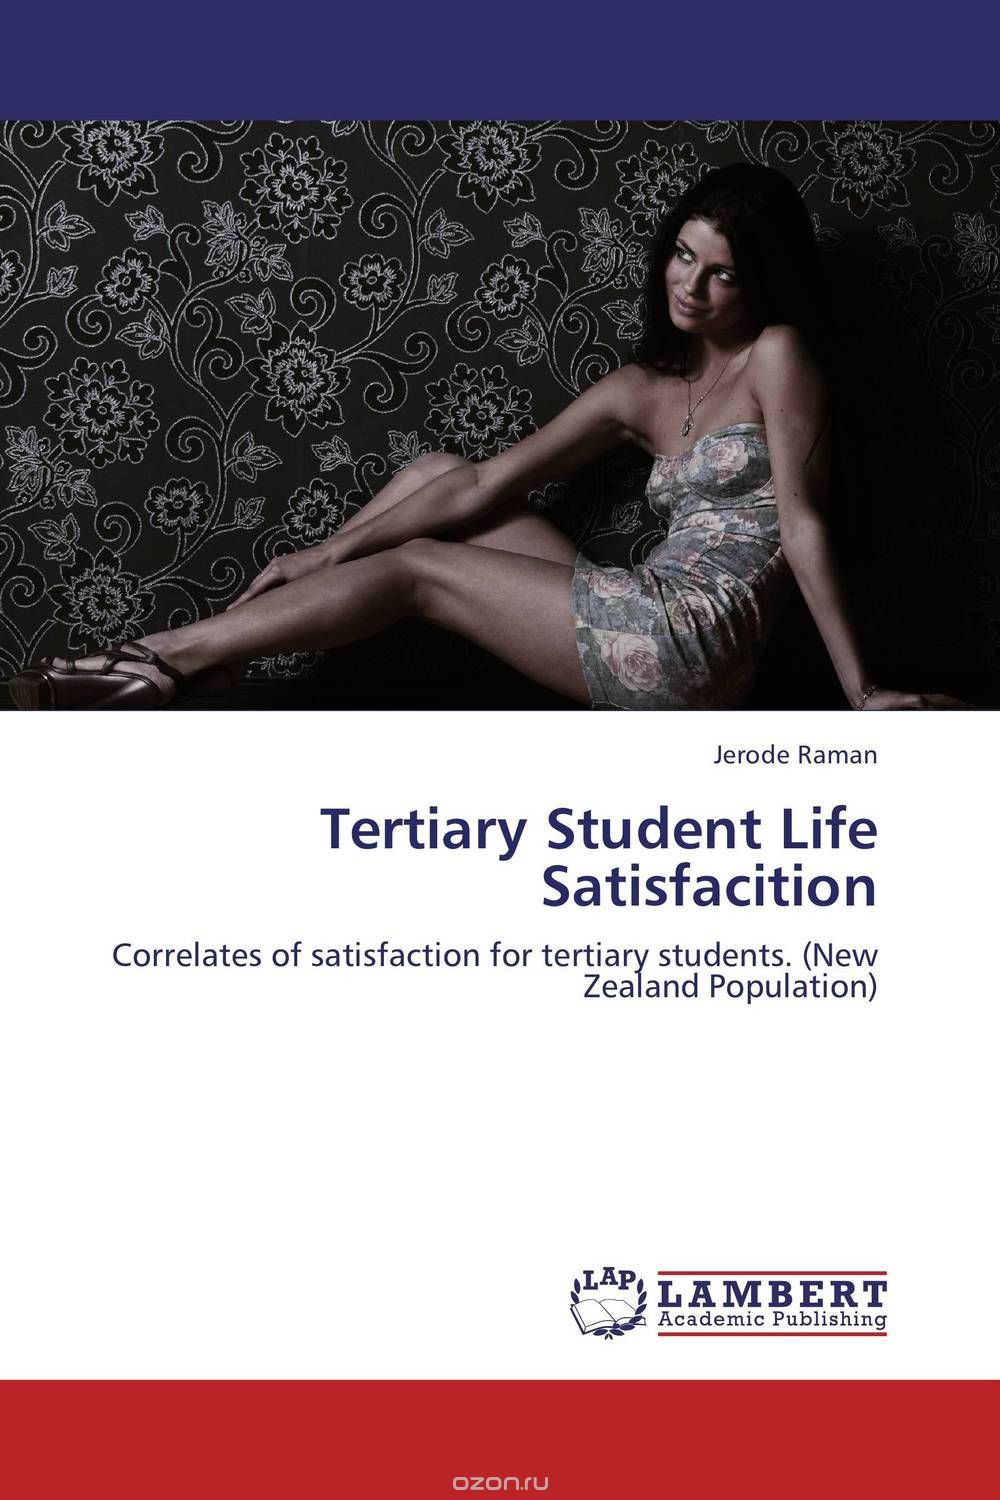 Скачать книгу "Tertiary Student Life Satisfacition"